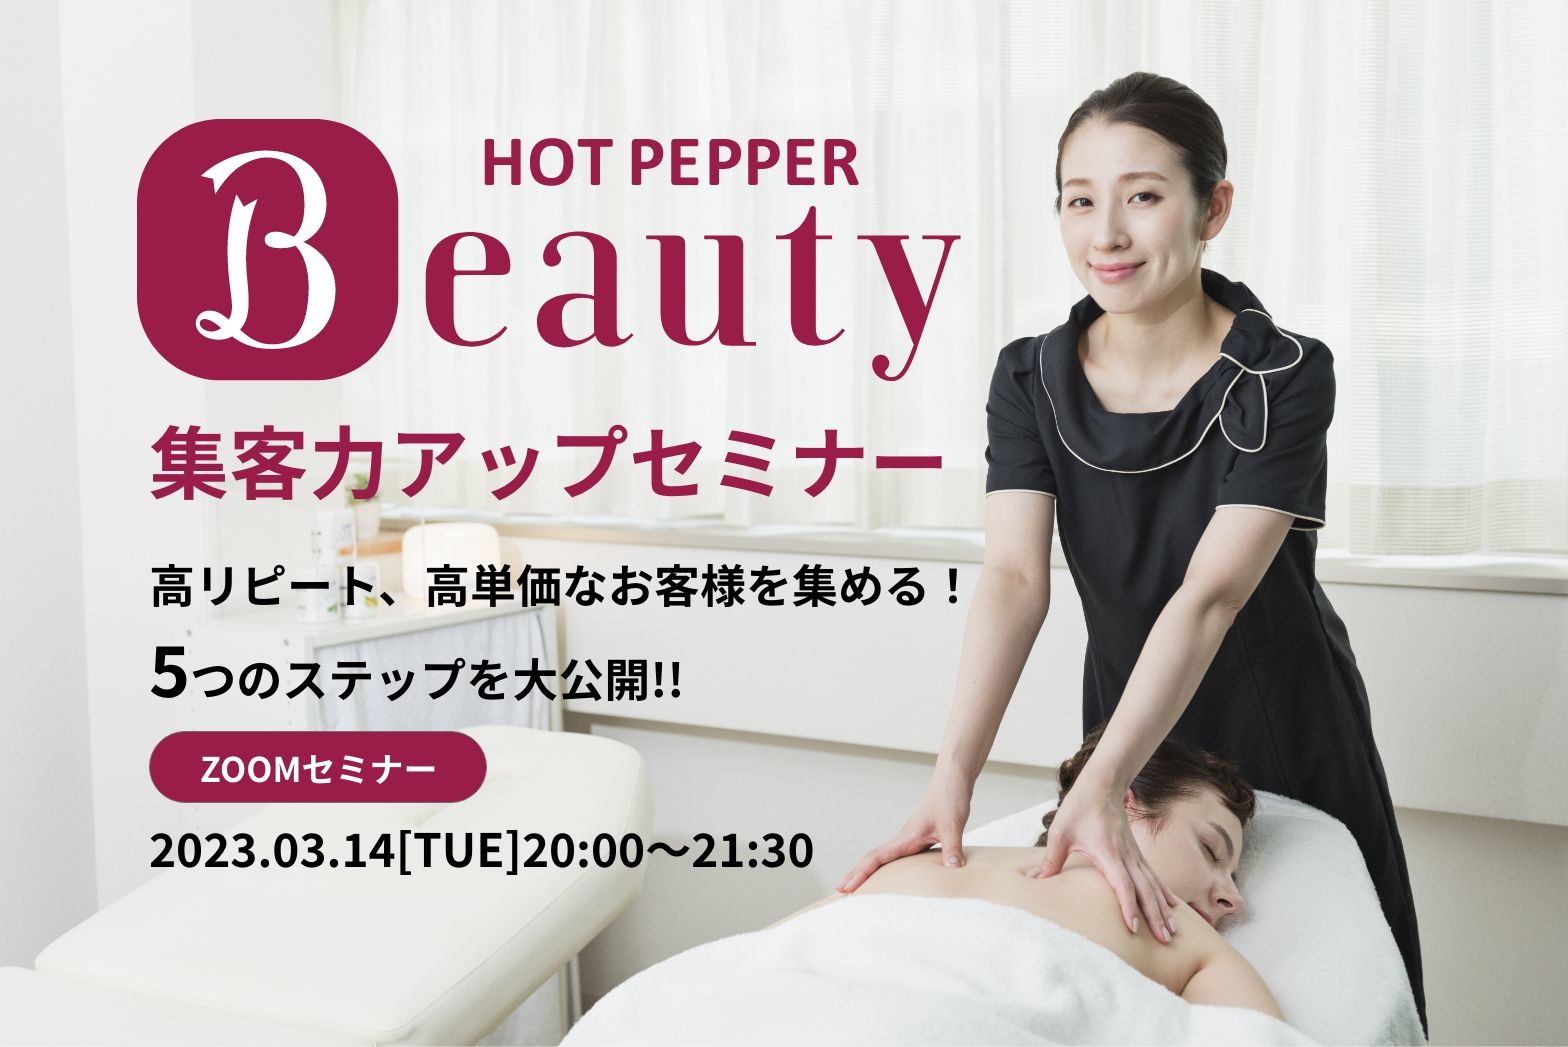 HOT PEPPER Beauty 集客力アップセミナー